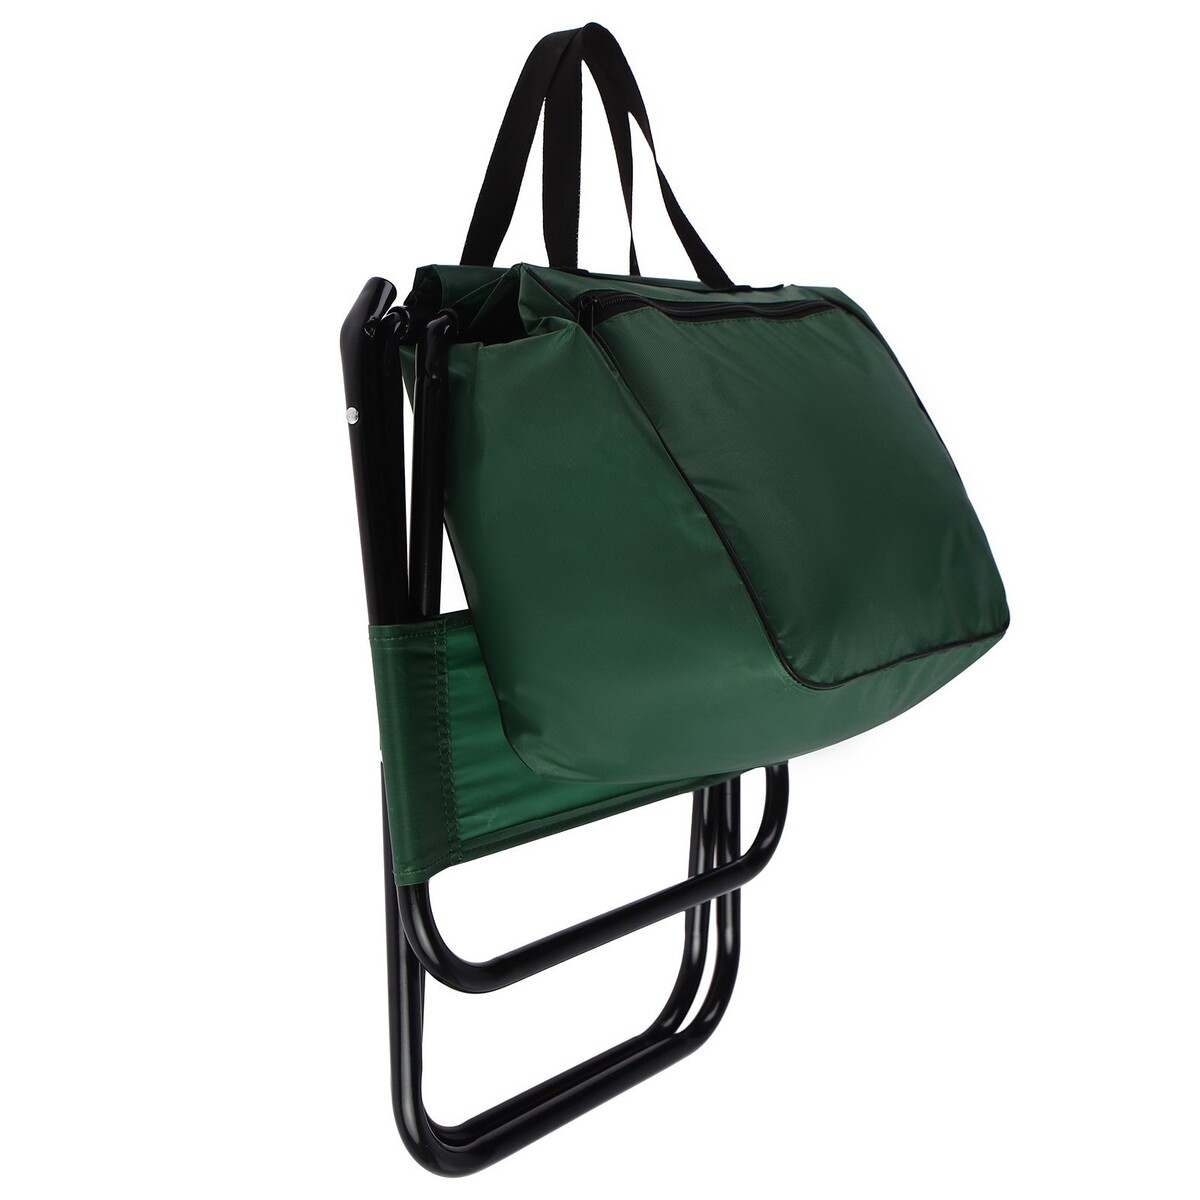 фото Стул туристический maclay, с сумкой, р. 24х26х60 см, до 60 кг, цвет зеленый